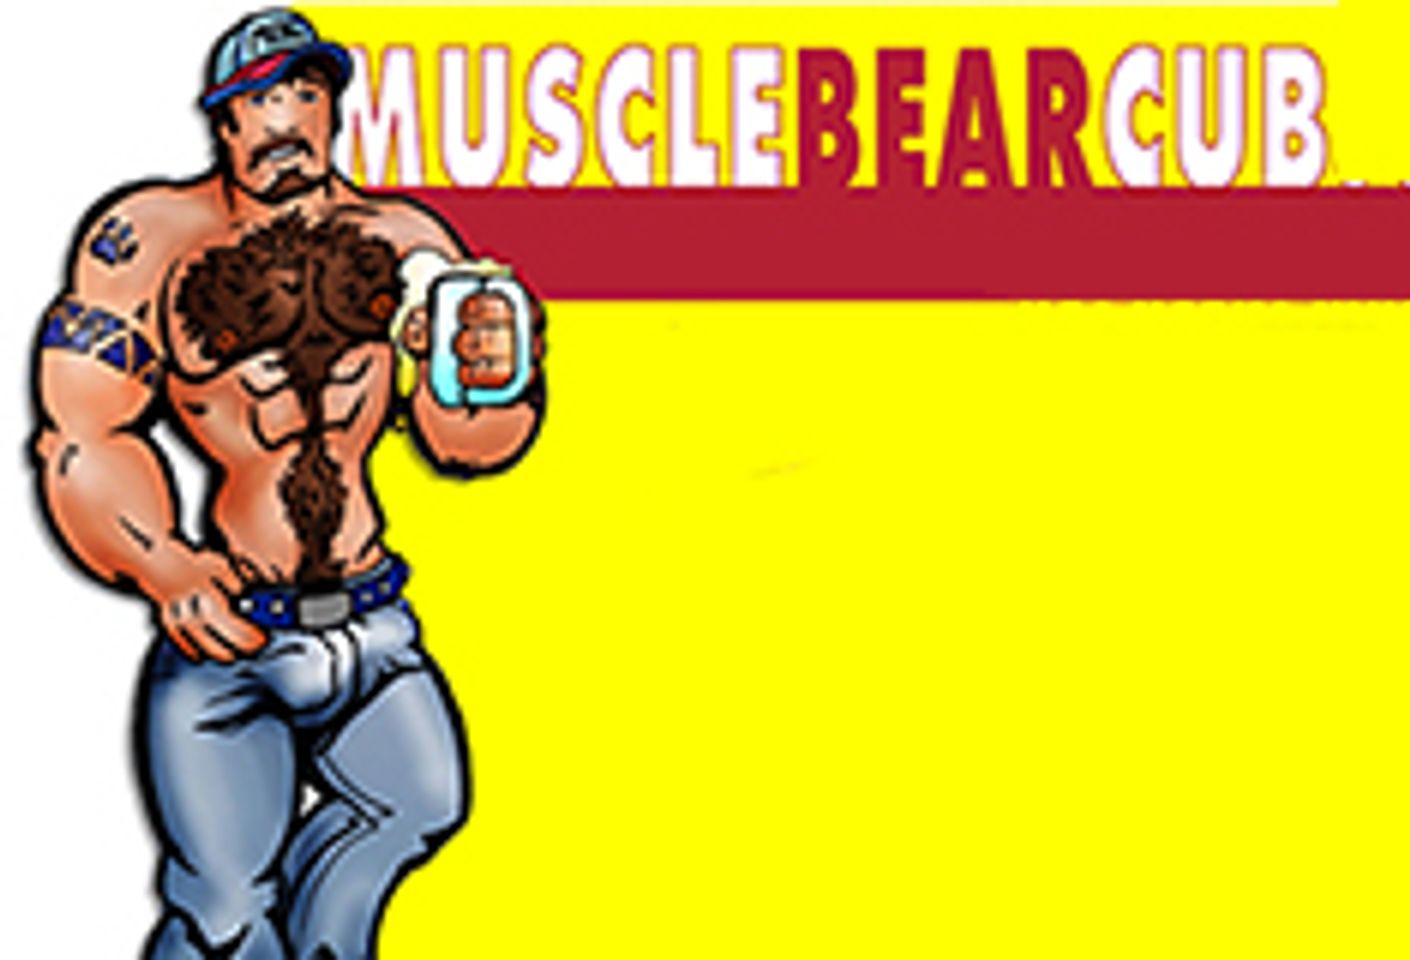 MuscleBearCub.com Seeks New Cub in SF